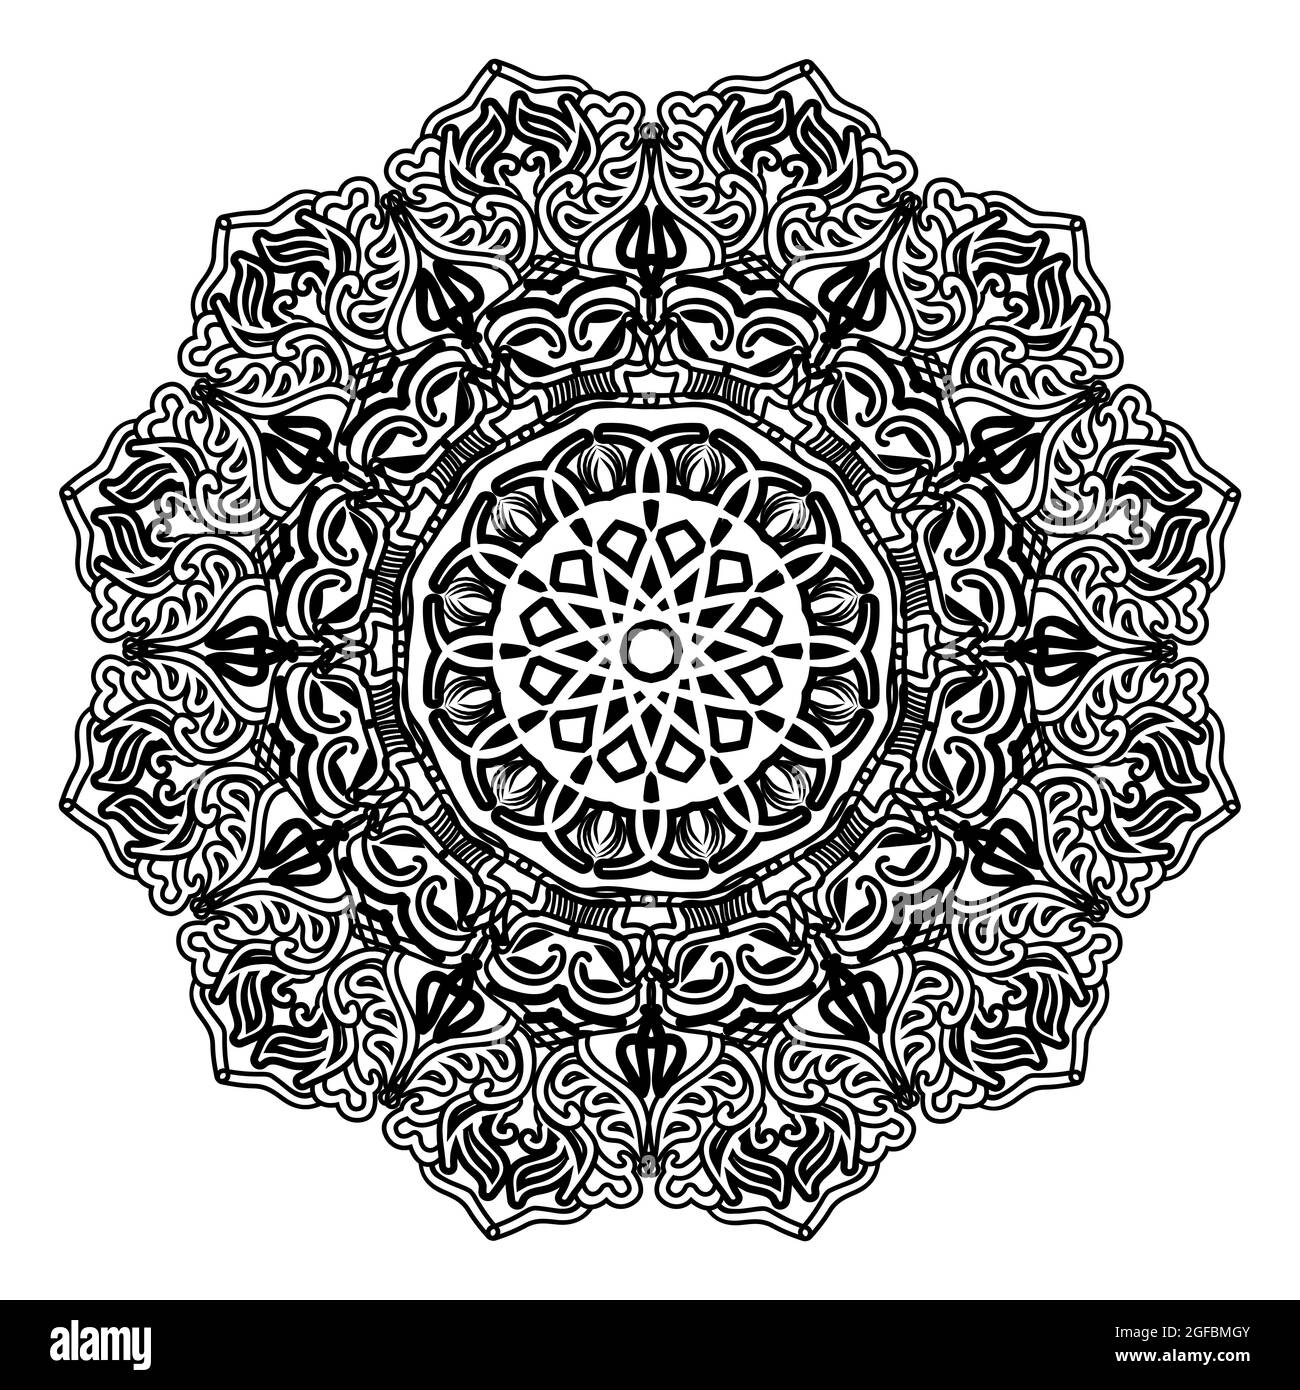 https://c8.alamy.com/comp/2GFBMGY/ornamental-mandala-of-abstract-art-decorative-vector-background-element-of-oriental-meditational-illustration-henna-design-2GFBMGY.jpg